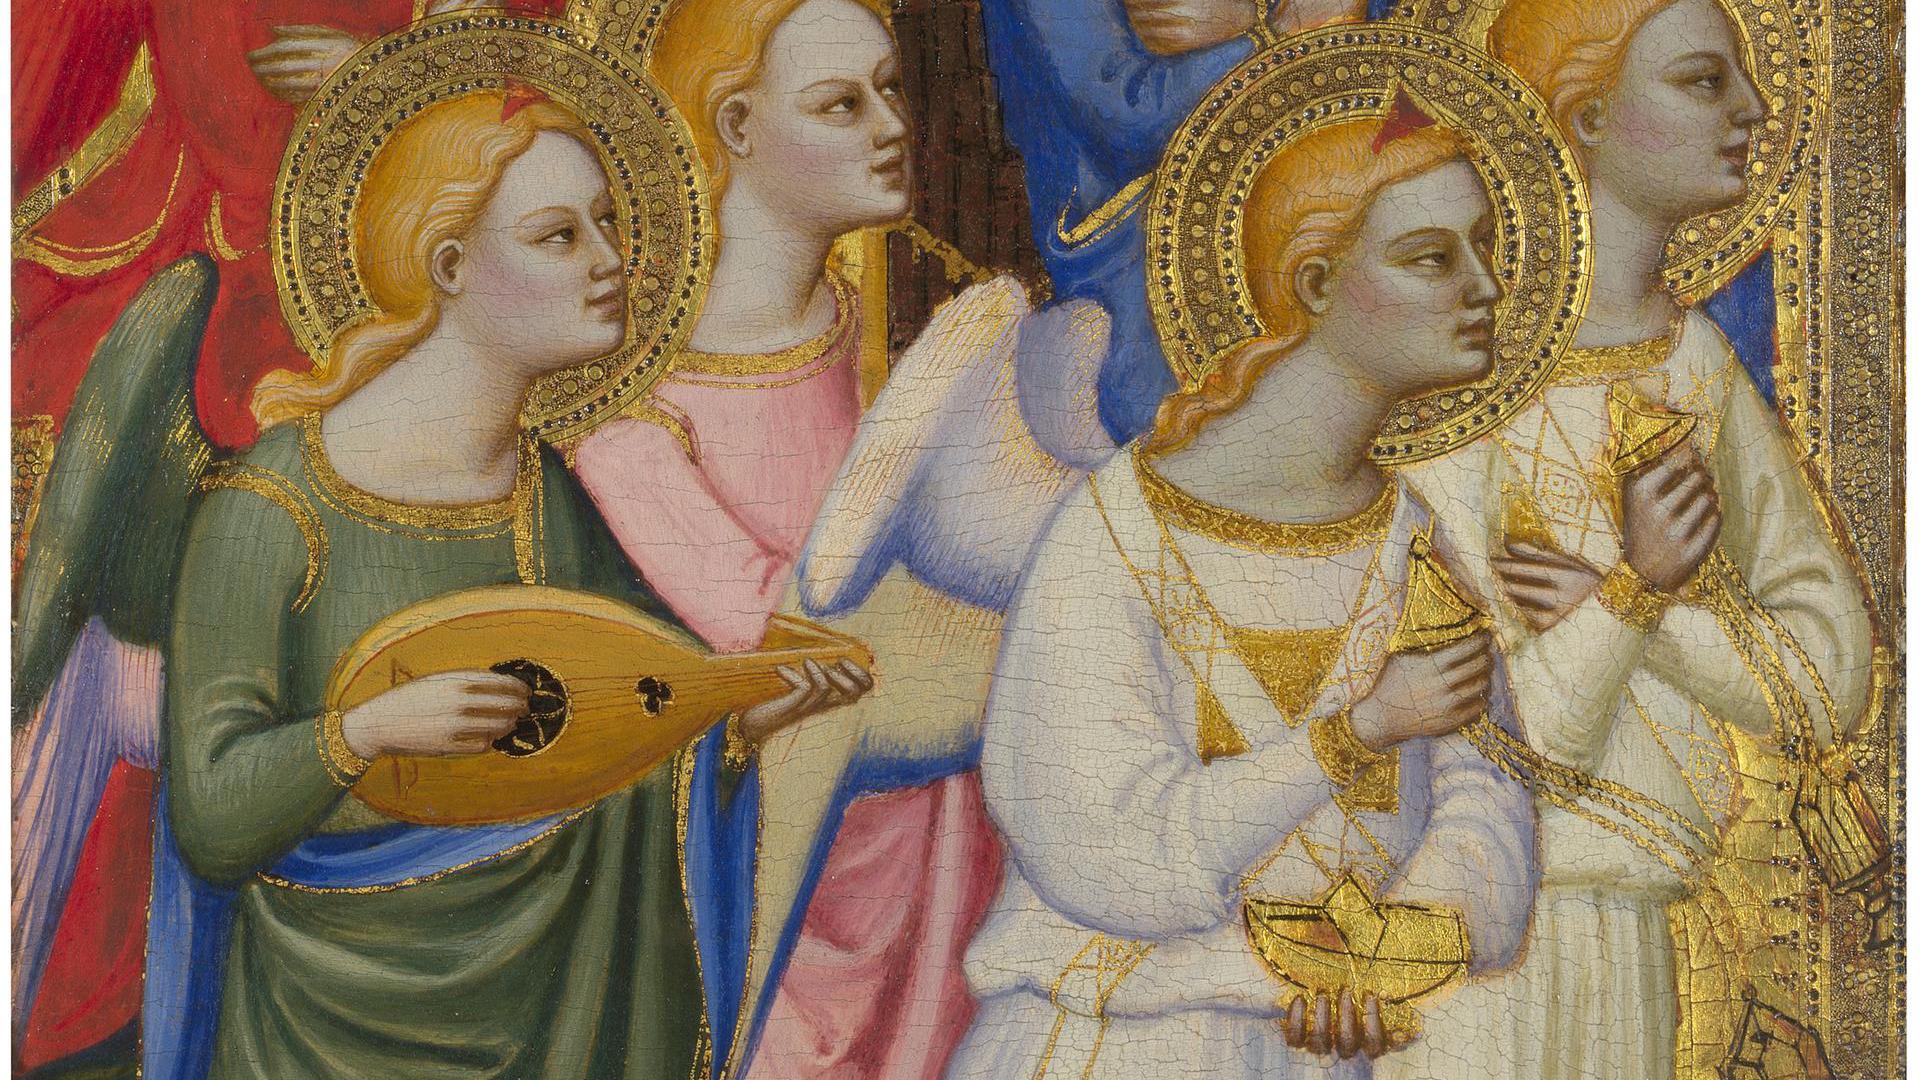 Jacopo di Cione and workshop | Seraphim, Cherubim and Adoring Angels | NG571 | National Gallery, London